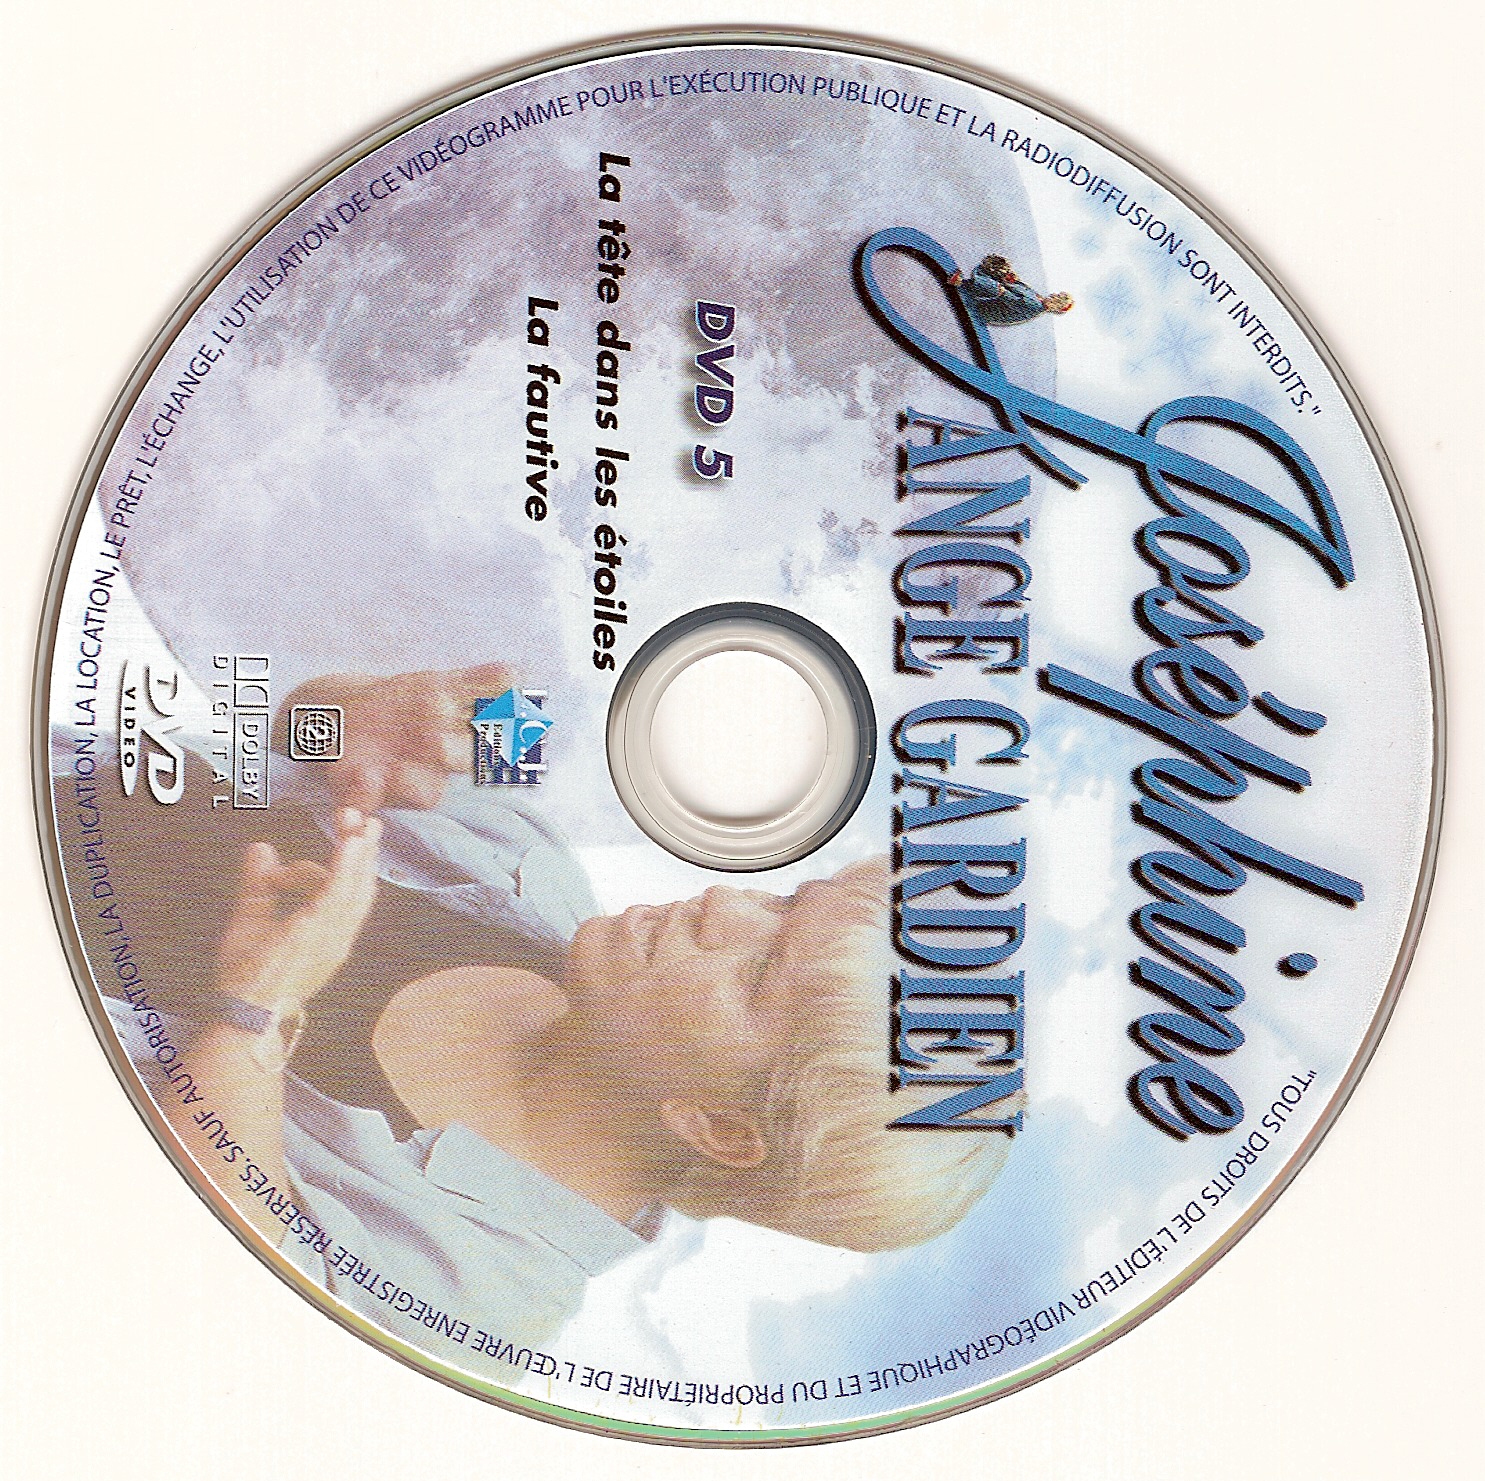 Josephine Saison 1 DVD 5